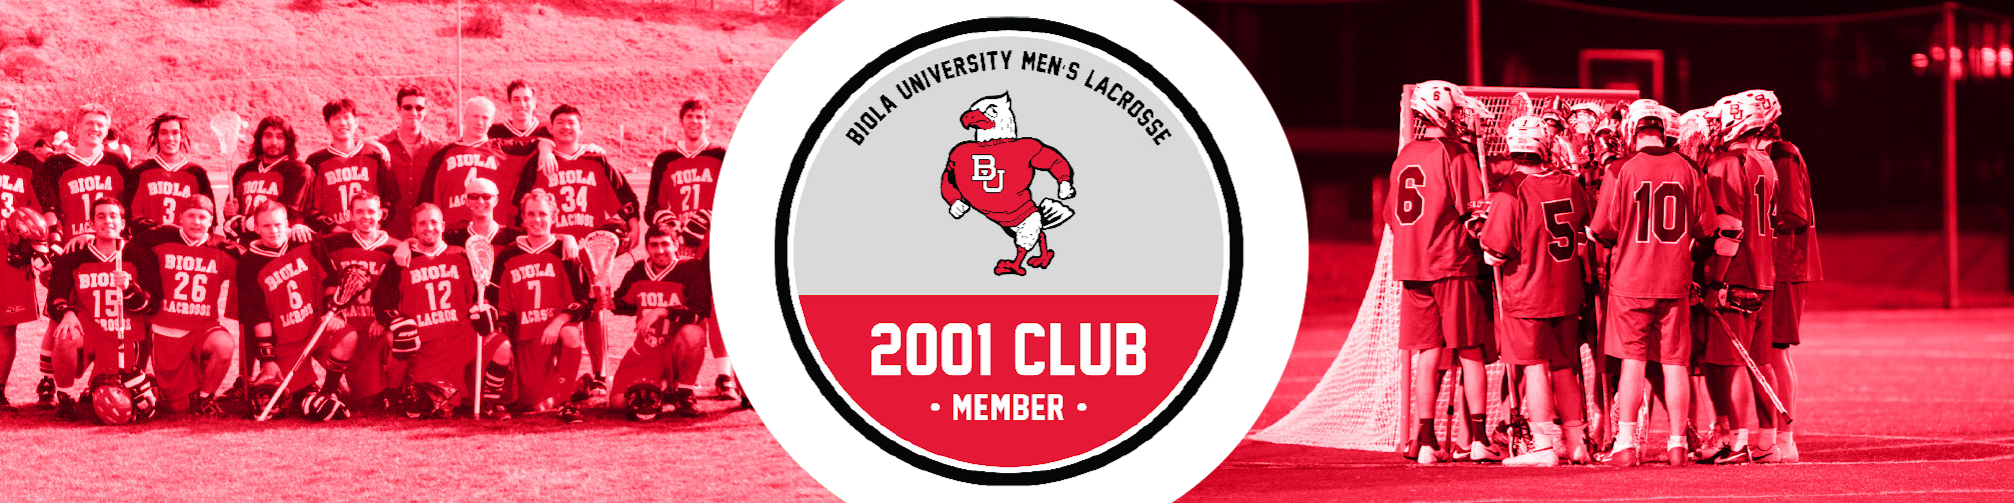 biola lacrosse 2001 club